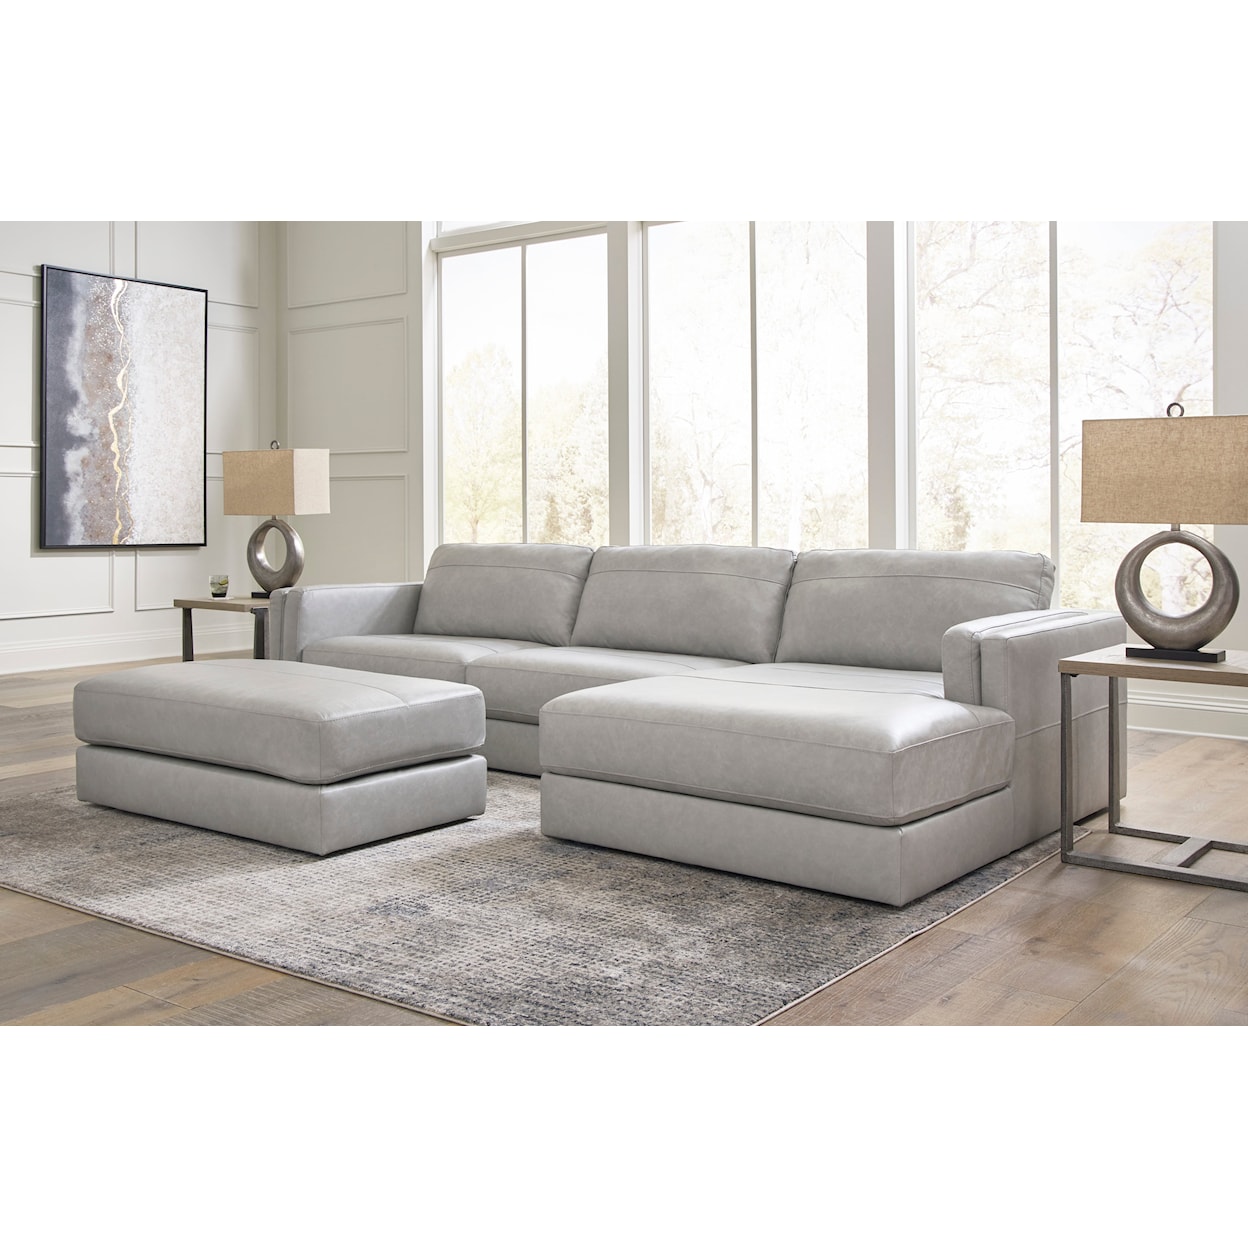 Ashley Furniture Signature Design Amiata Living Room Set